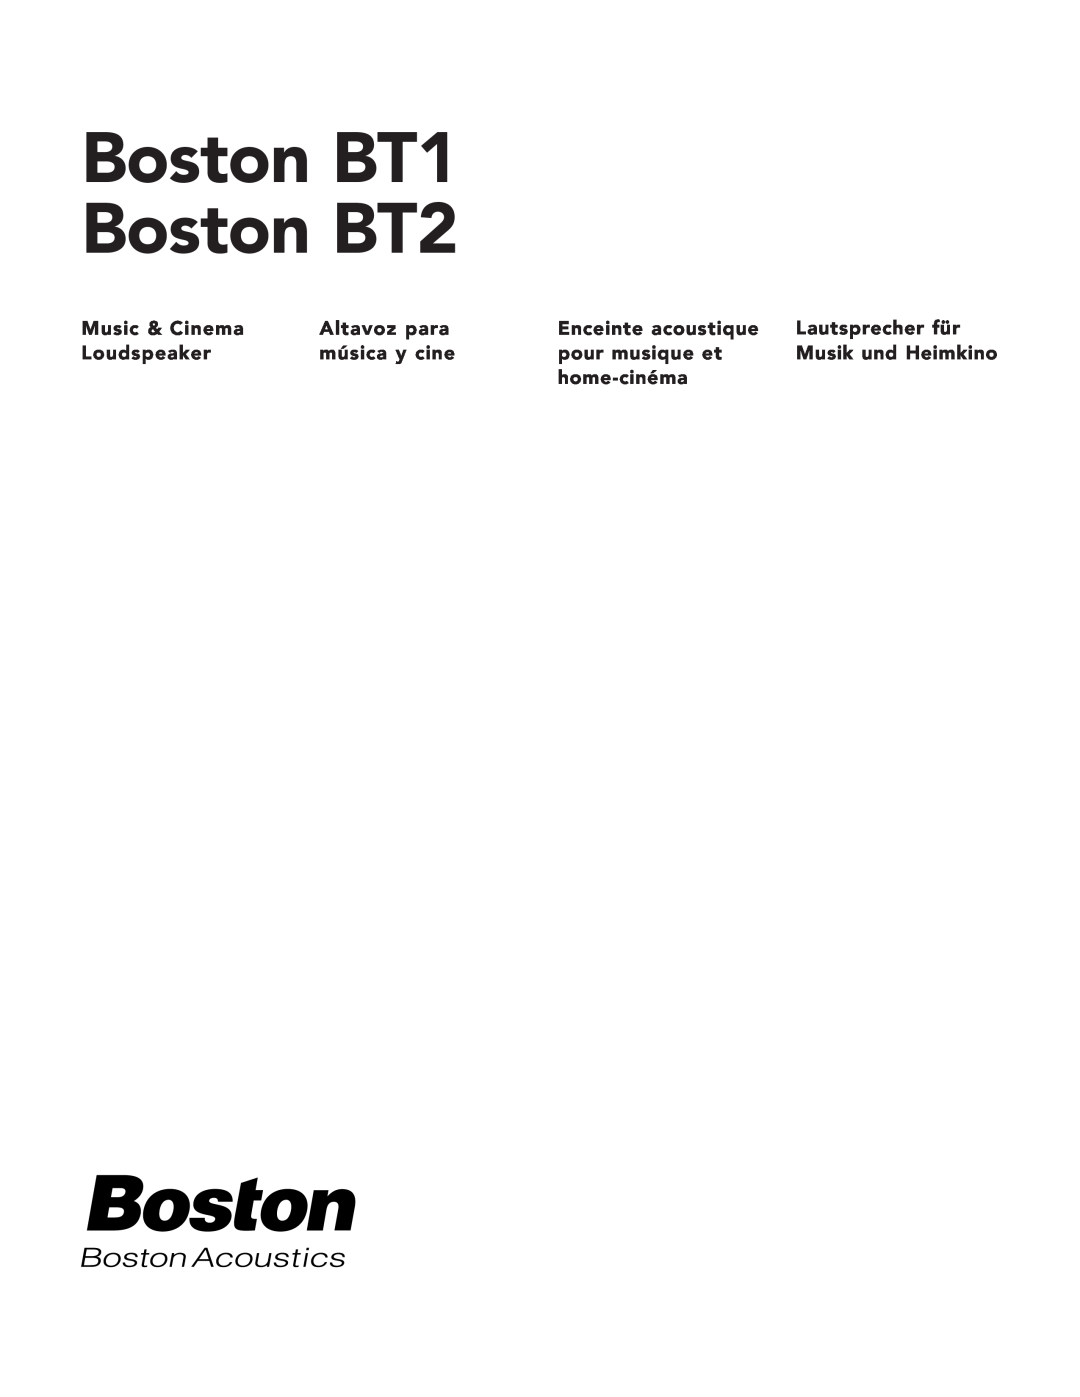 Boston Acoustics manual Boston BT1 Boston BT2, Music & Cinema, Altavoz para, Enceinte acoustique, Lautsprecher für 